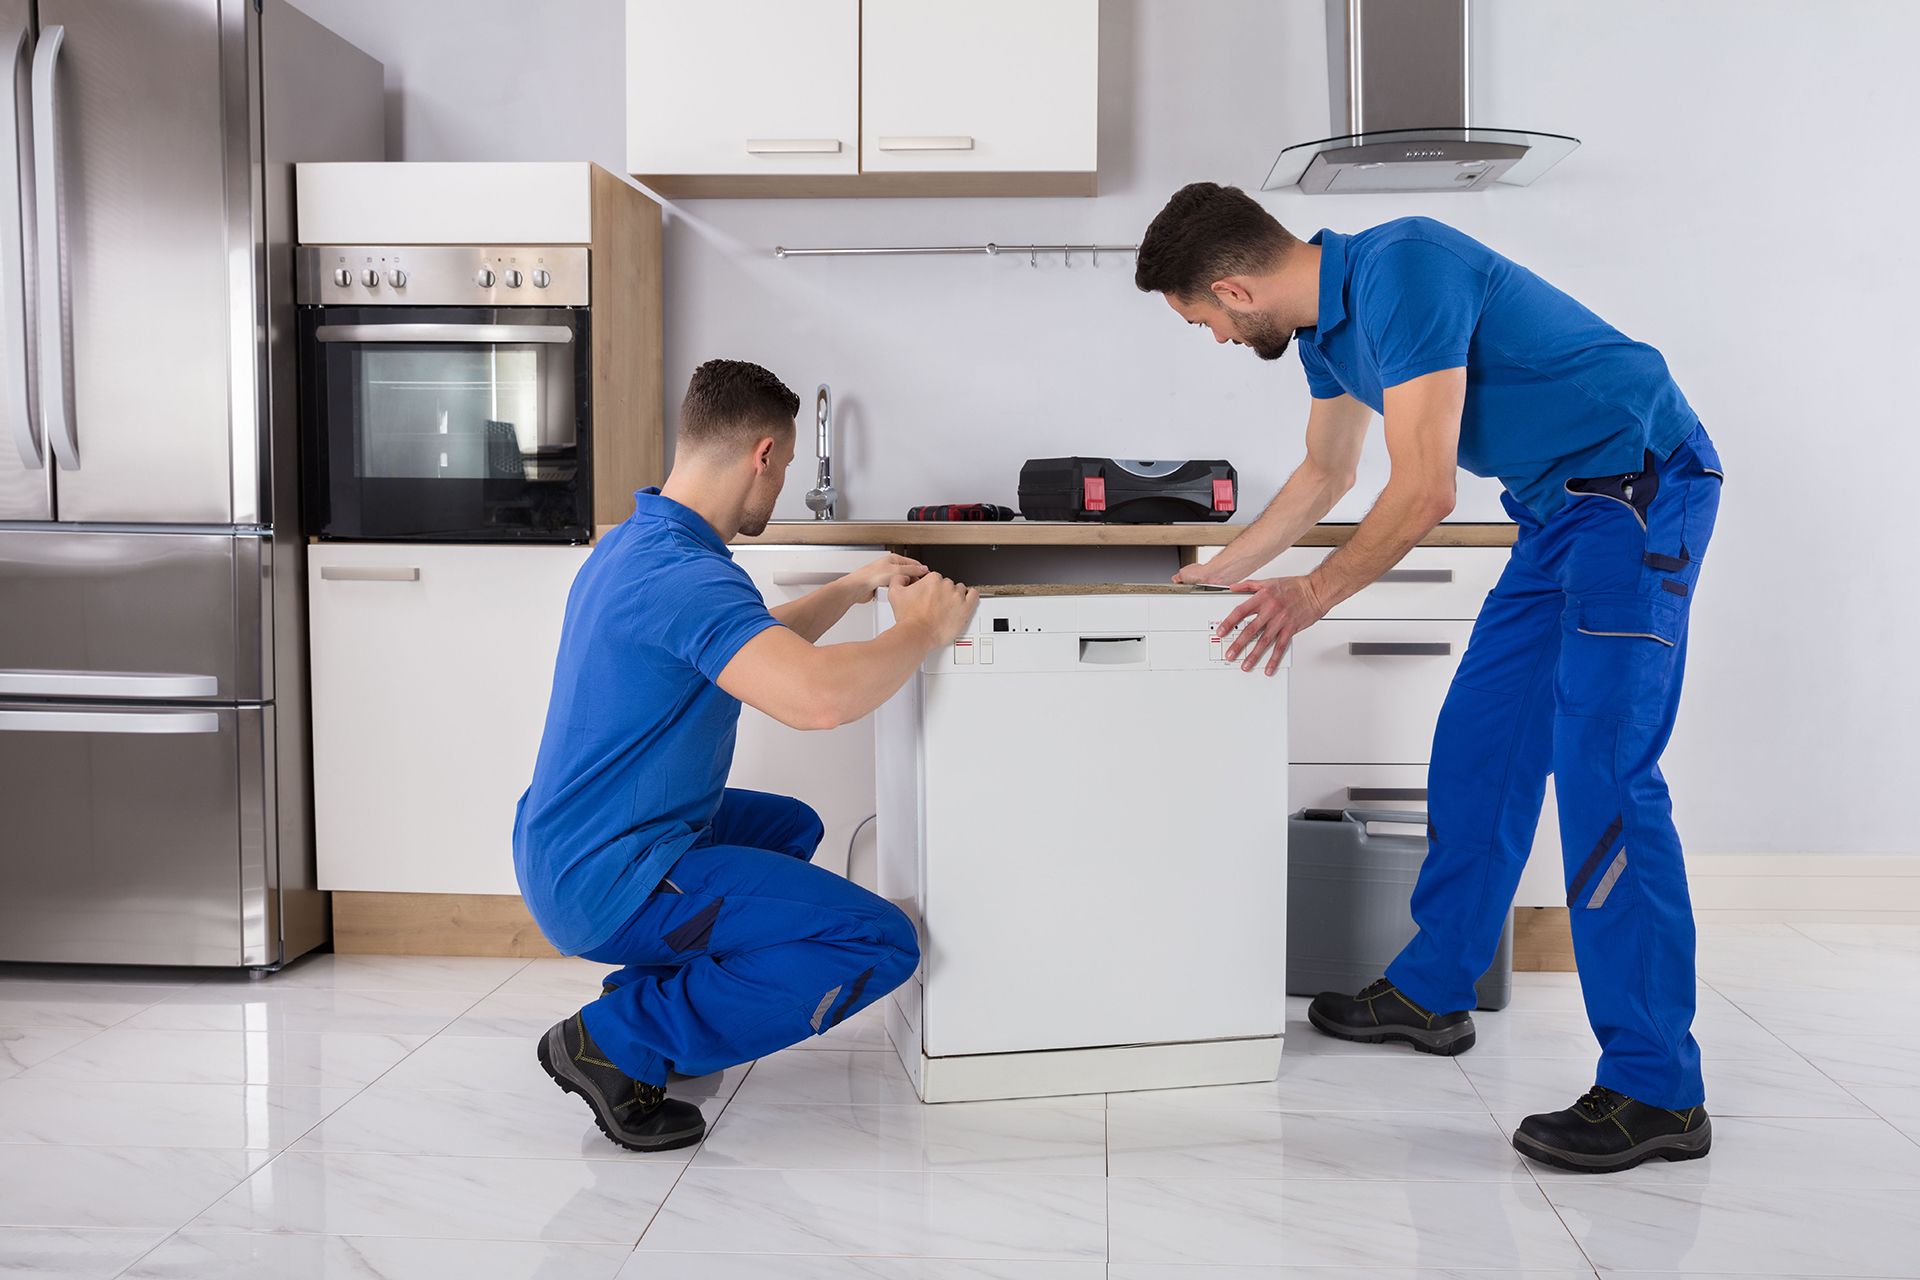 Two men installing a dishwasher